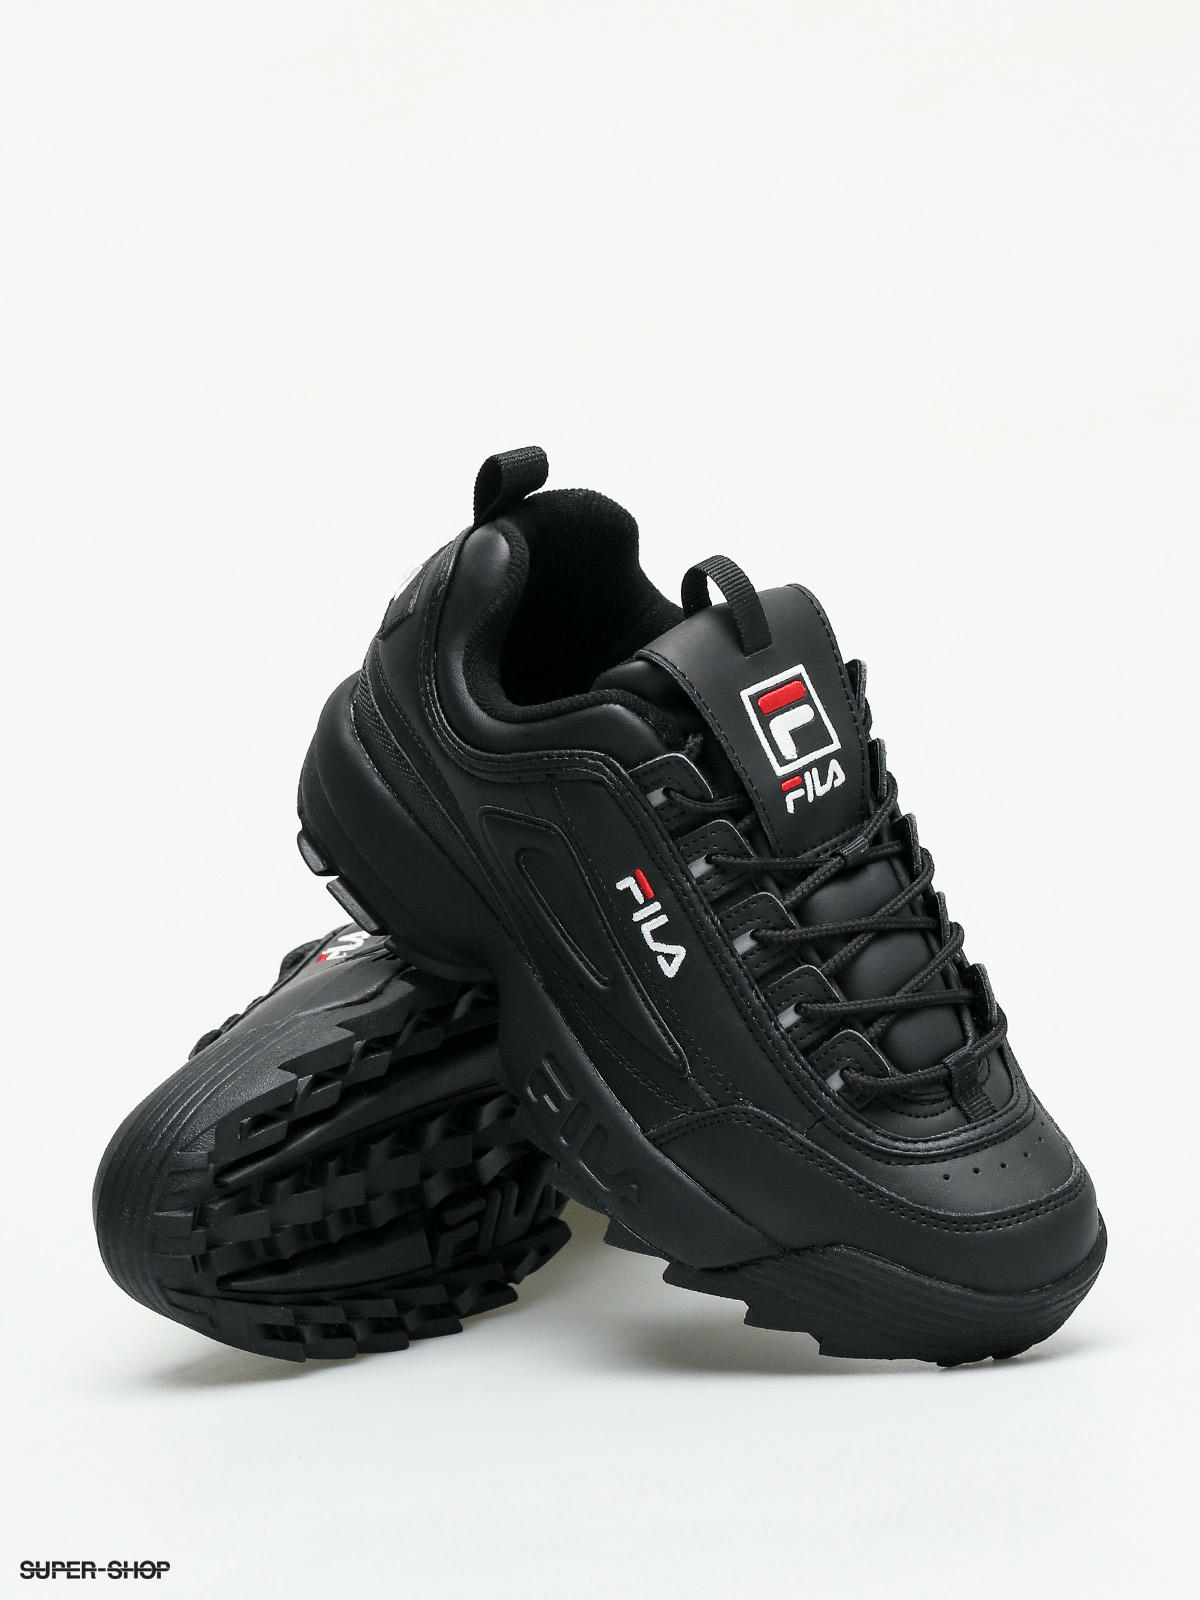 black fila shoes